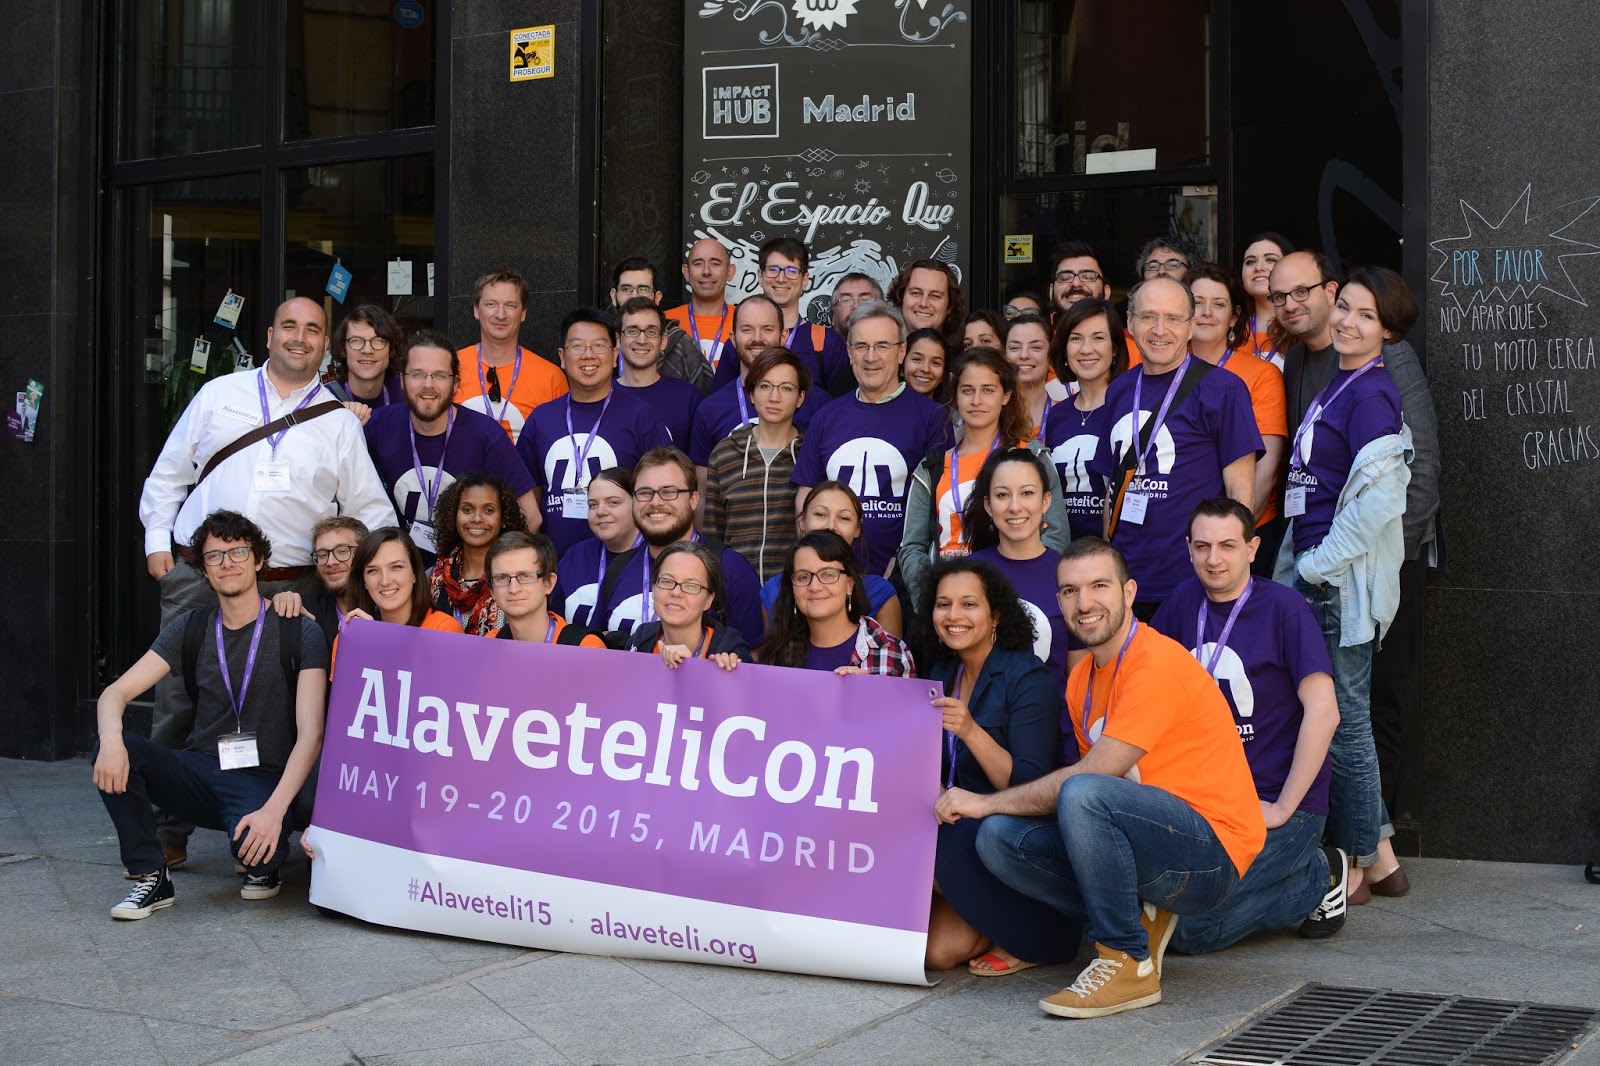 Alavateli_Con_group